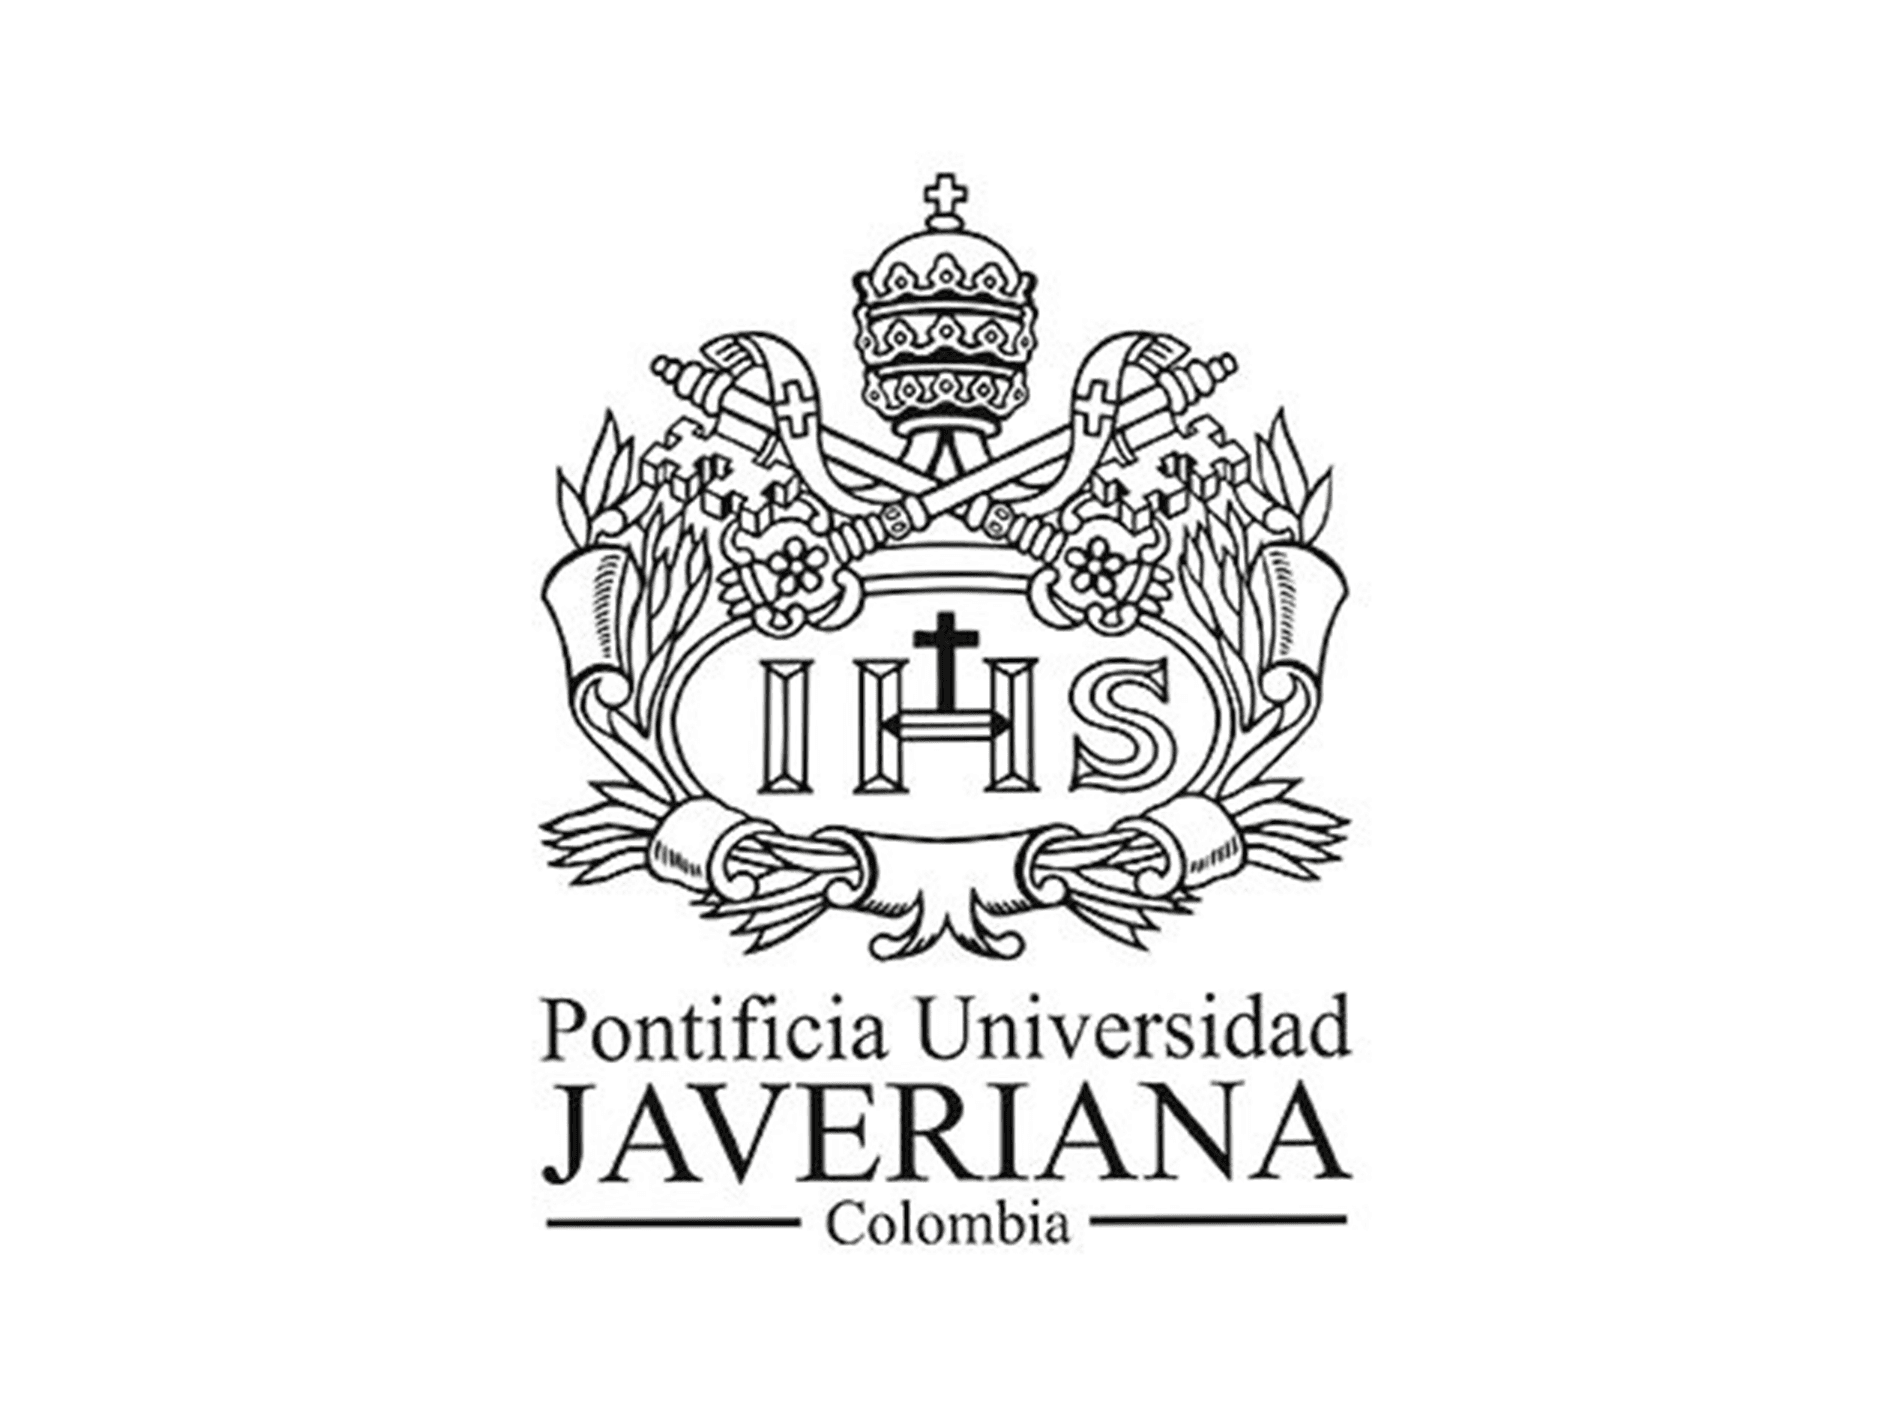 Pontificia Universidad Javeriana colòmbia logo